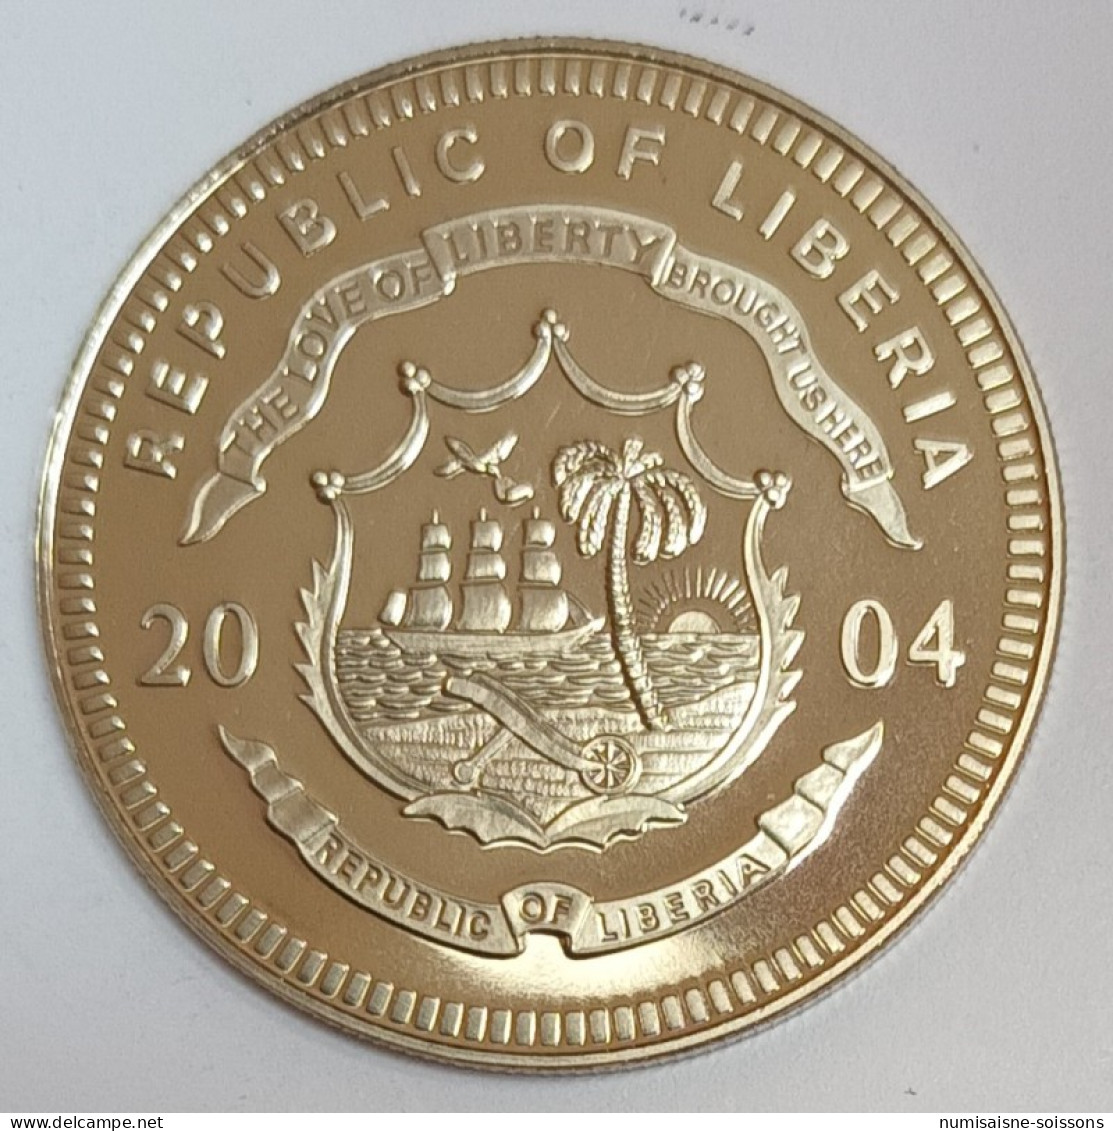 LIBÉRIA - 5 DOLLARS 2004 - NOUVELLES MONNAIES DU VATICAN - BE - Liberia